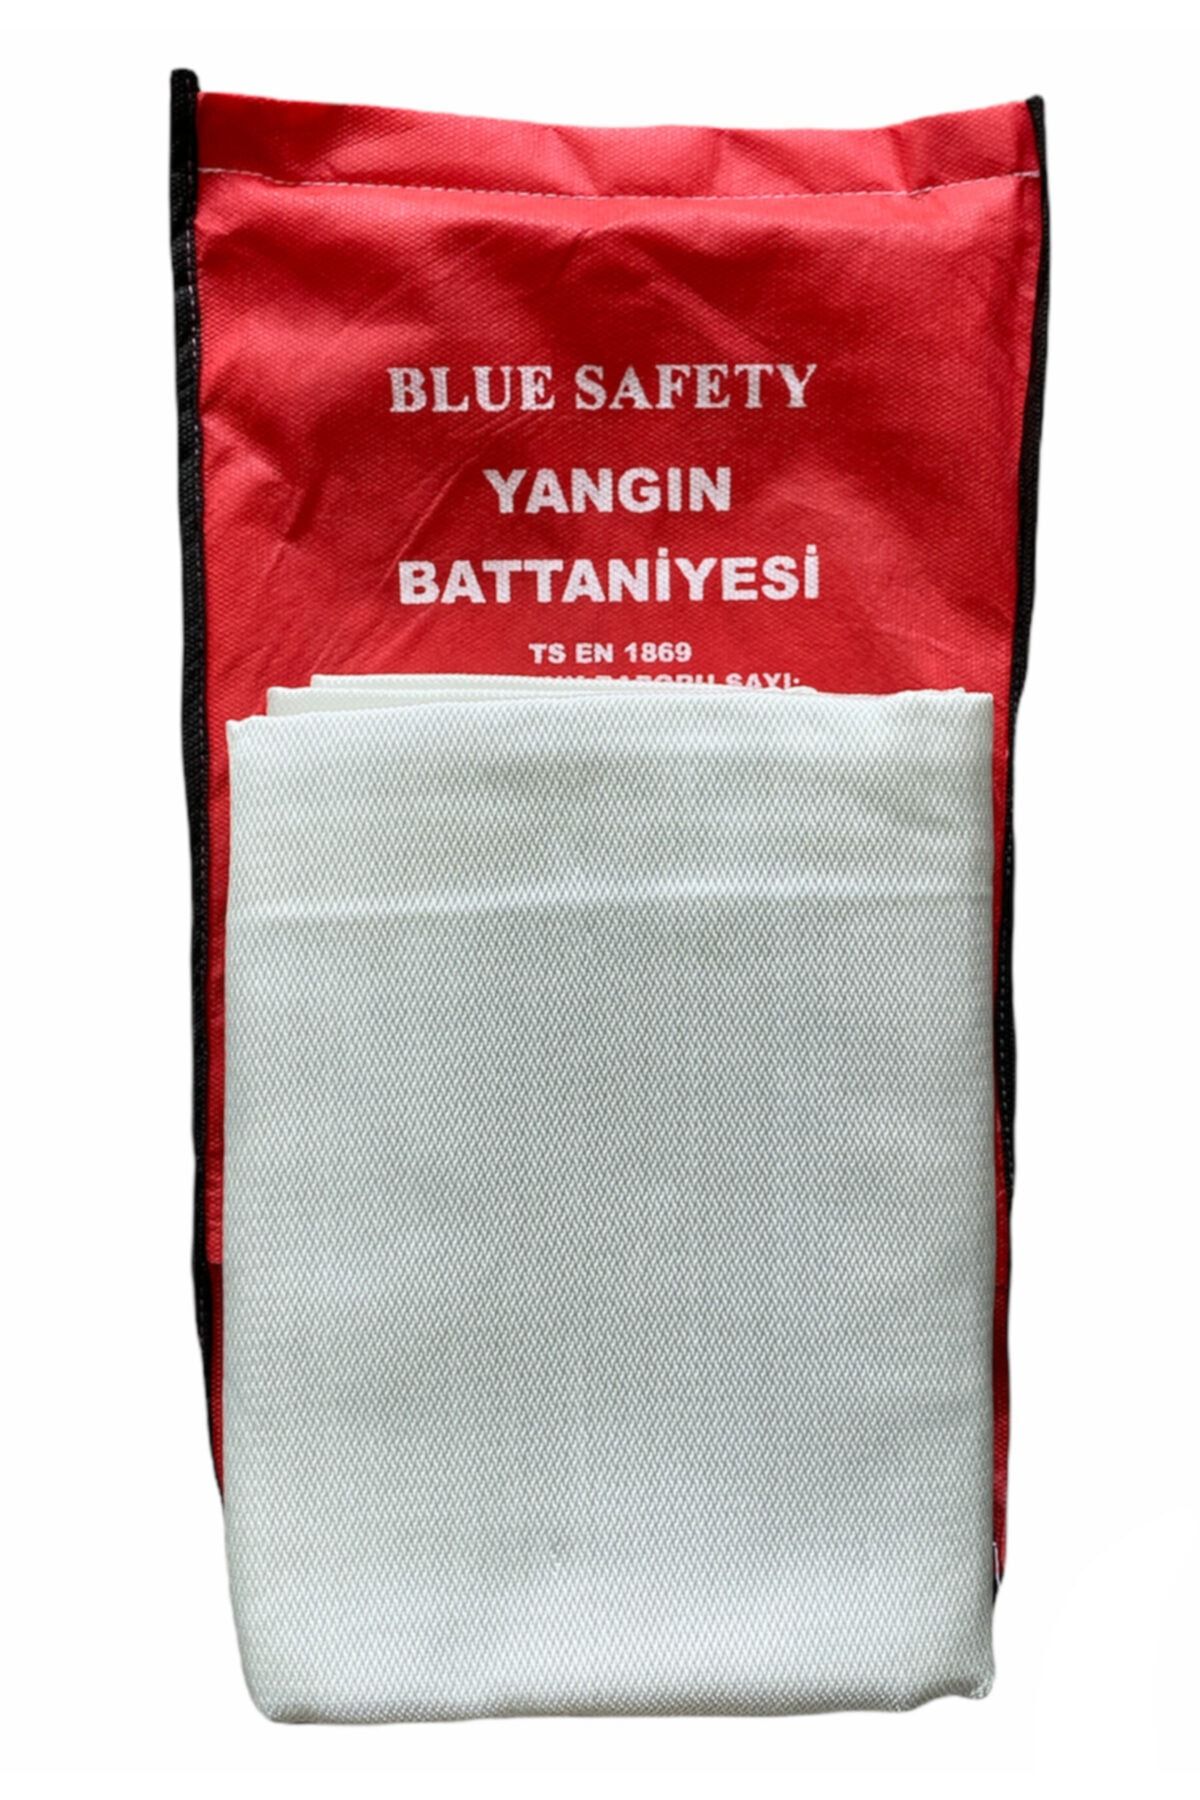 BLUE SAFETY Yangın Battaniyesi 150*180